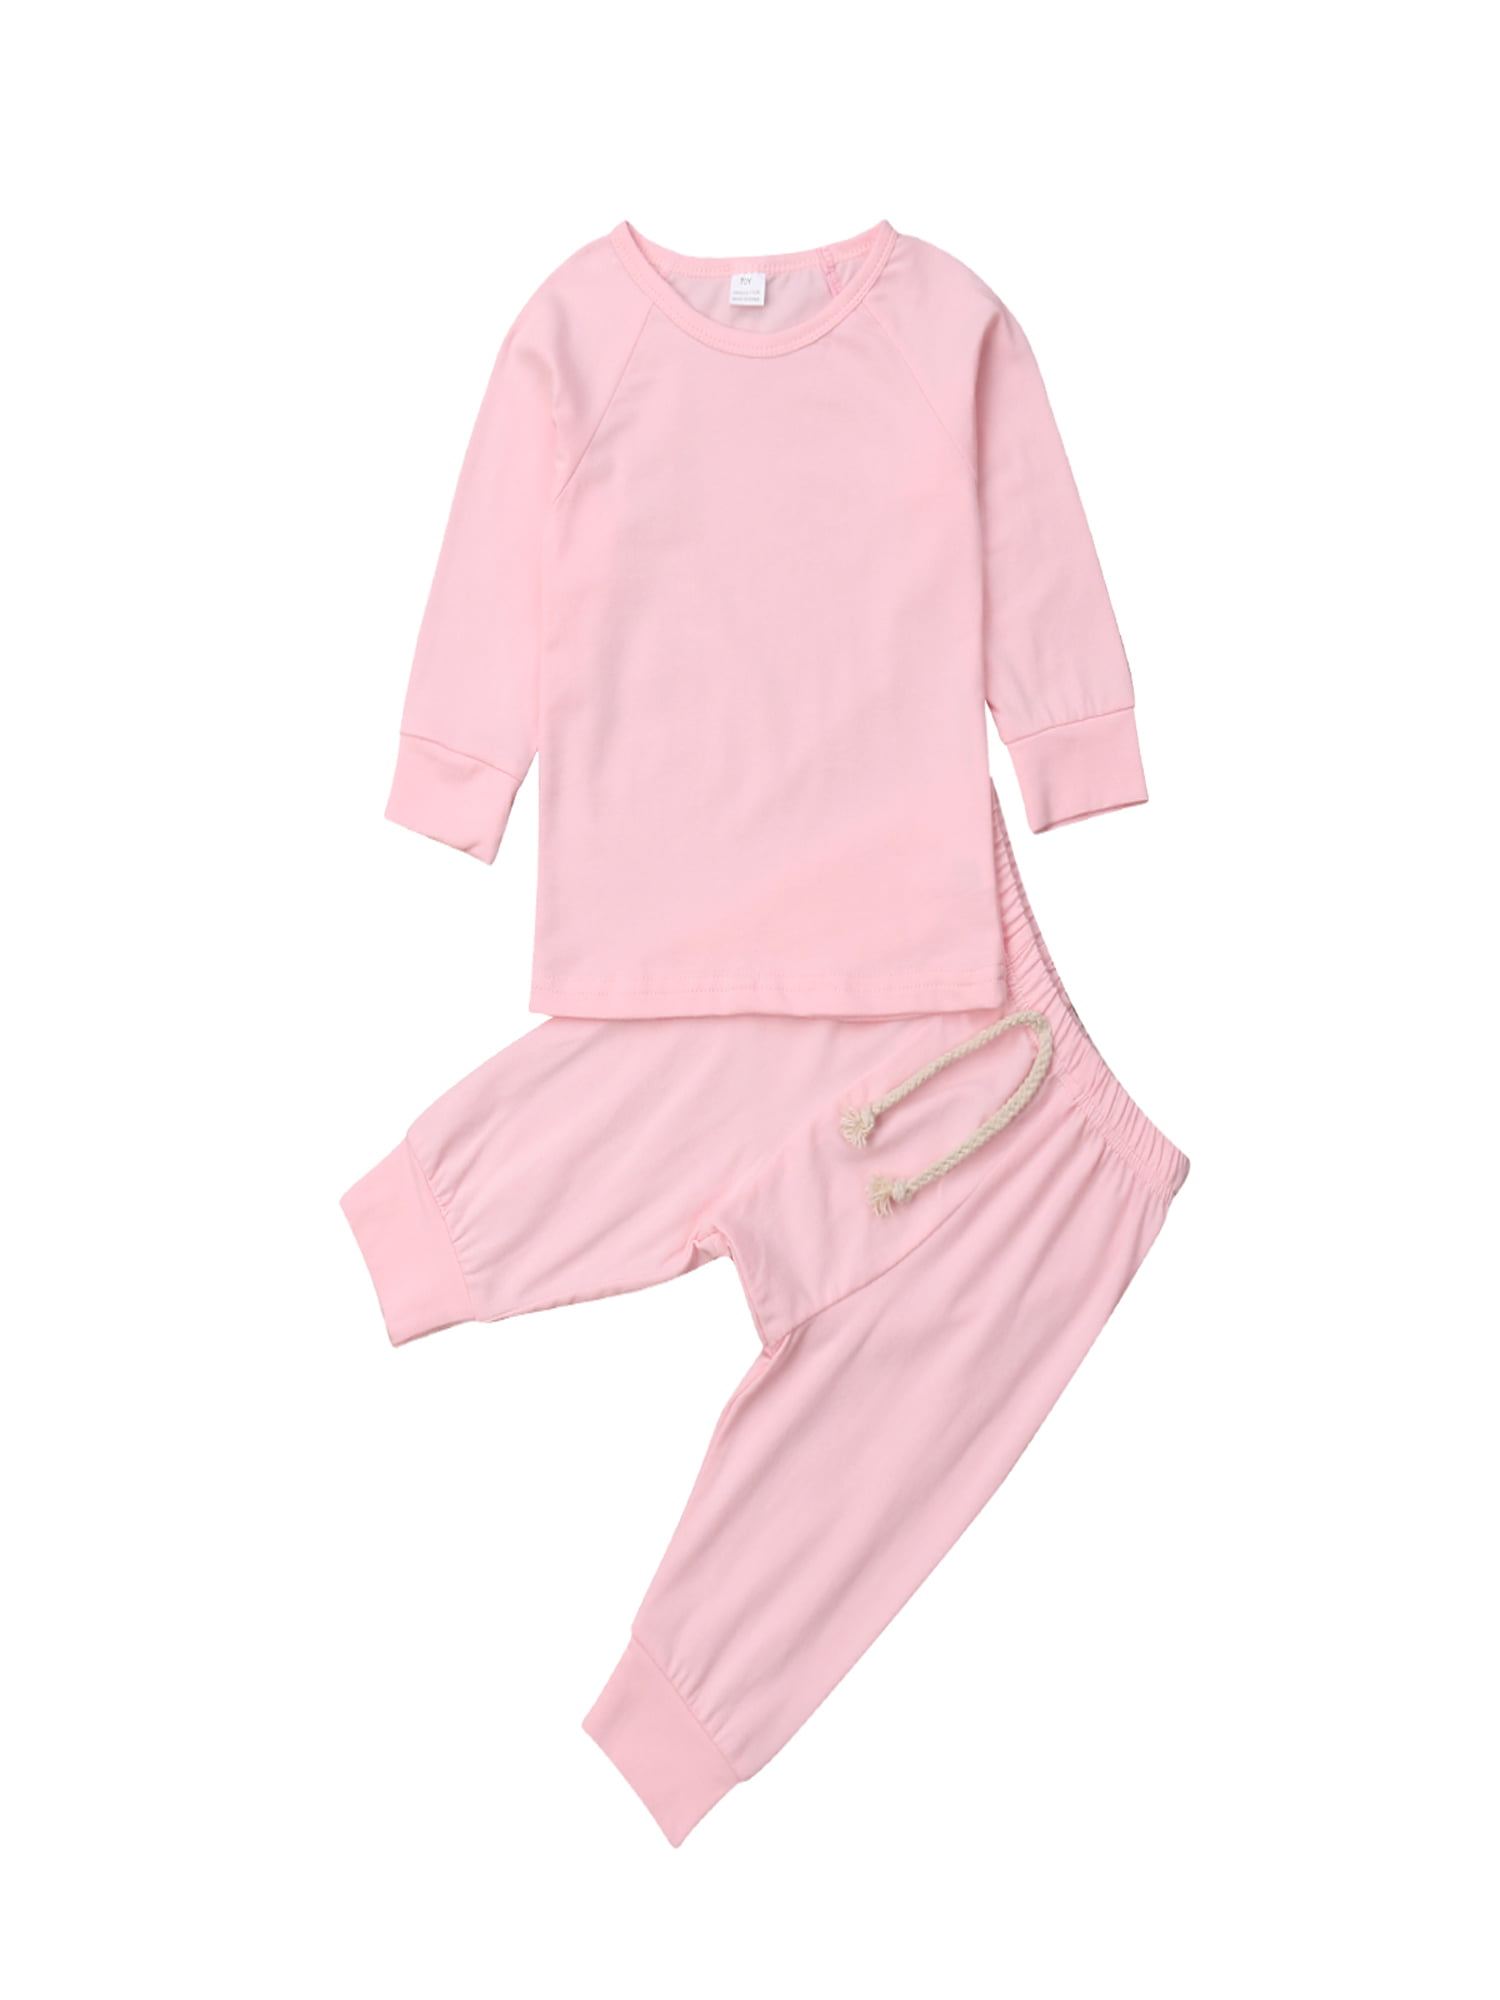 0-2T Infant Baby Boy Girl Pajamas Pjs Set Sleepwear Nightwear Clothes ...